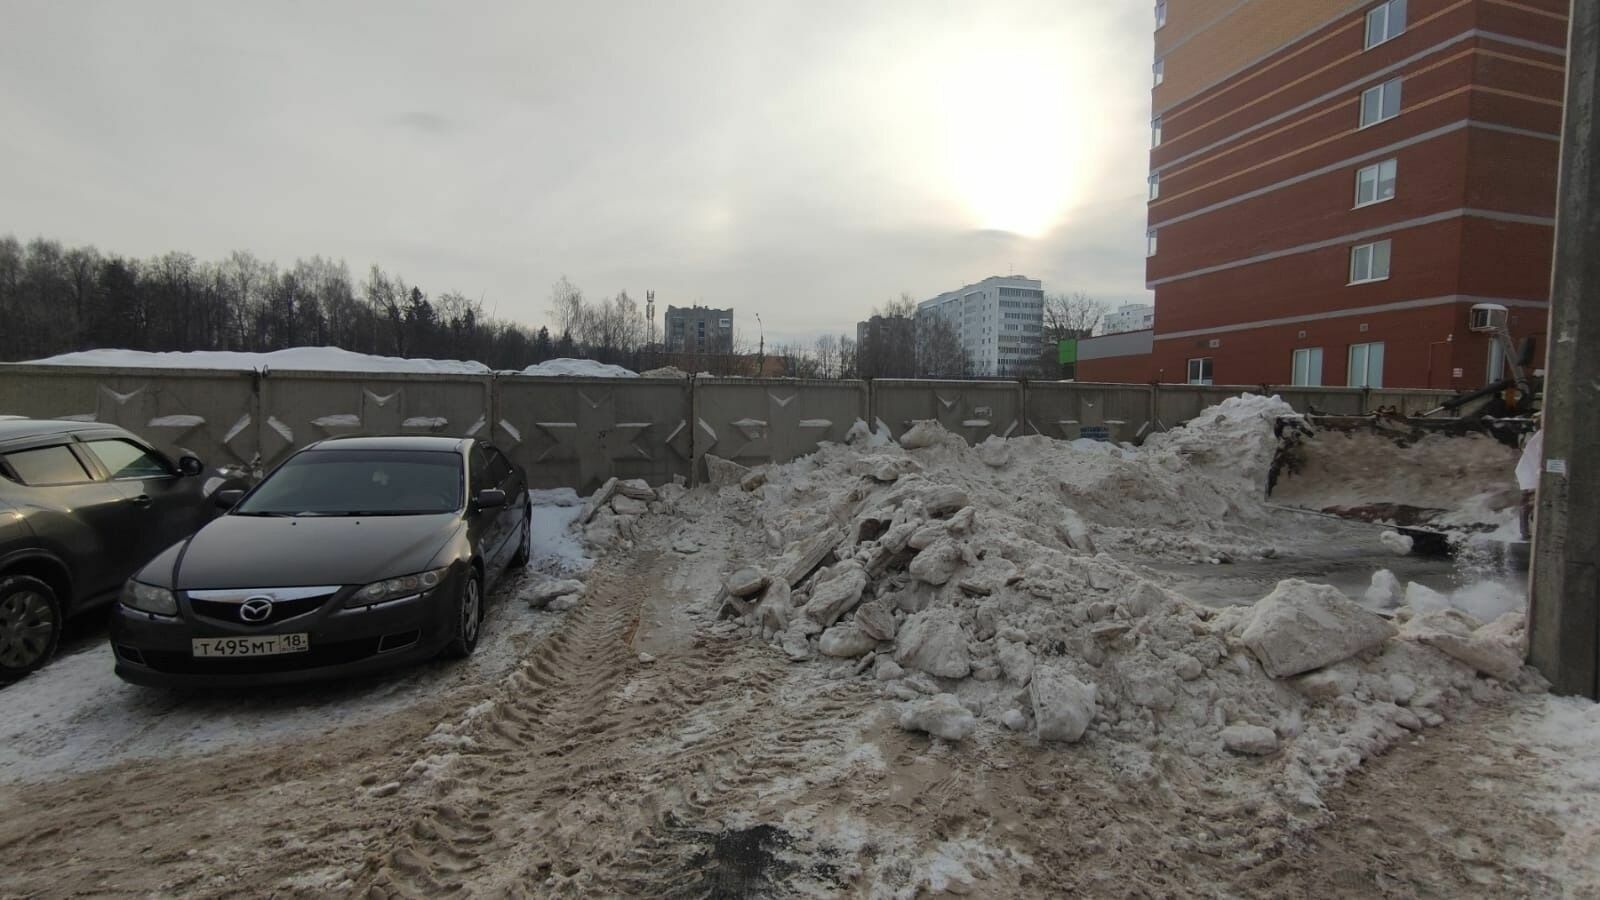 219 нарушений уборки снега во дворах выявили в Ижевске